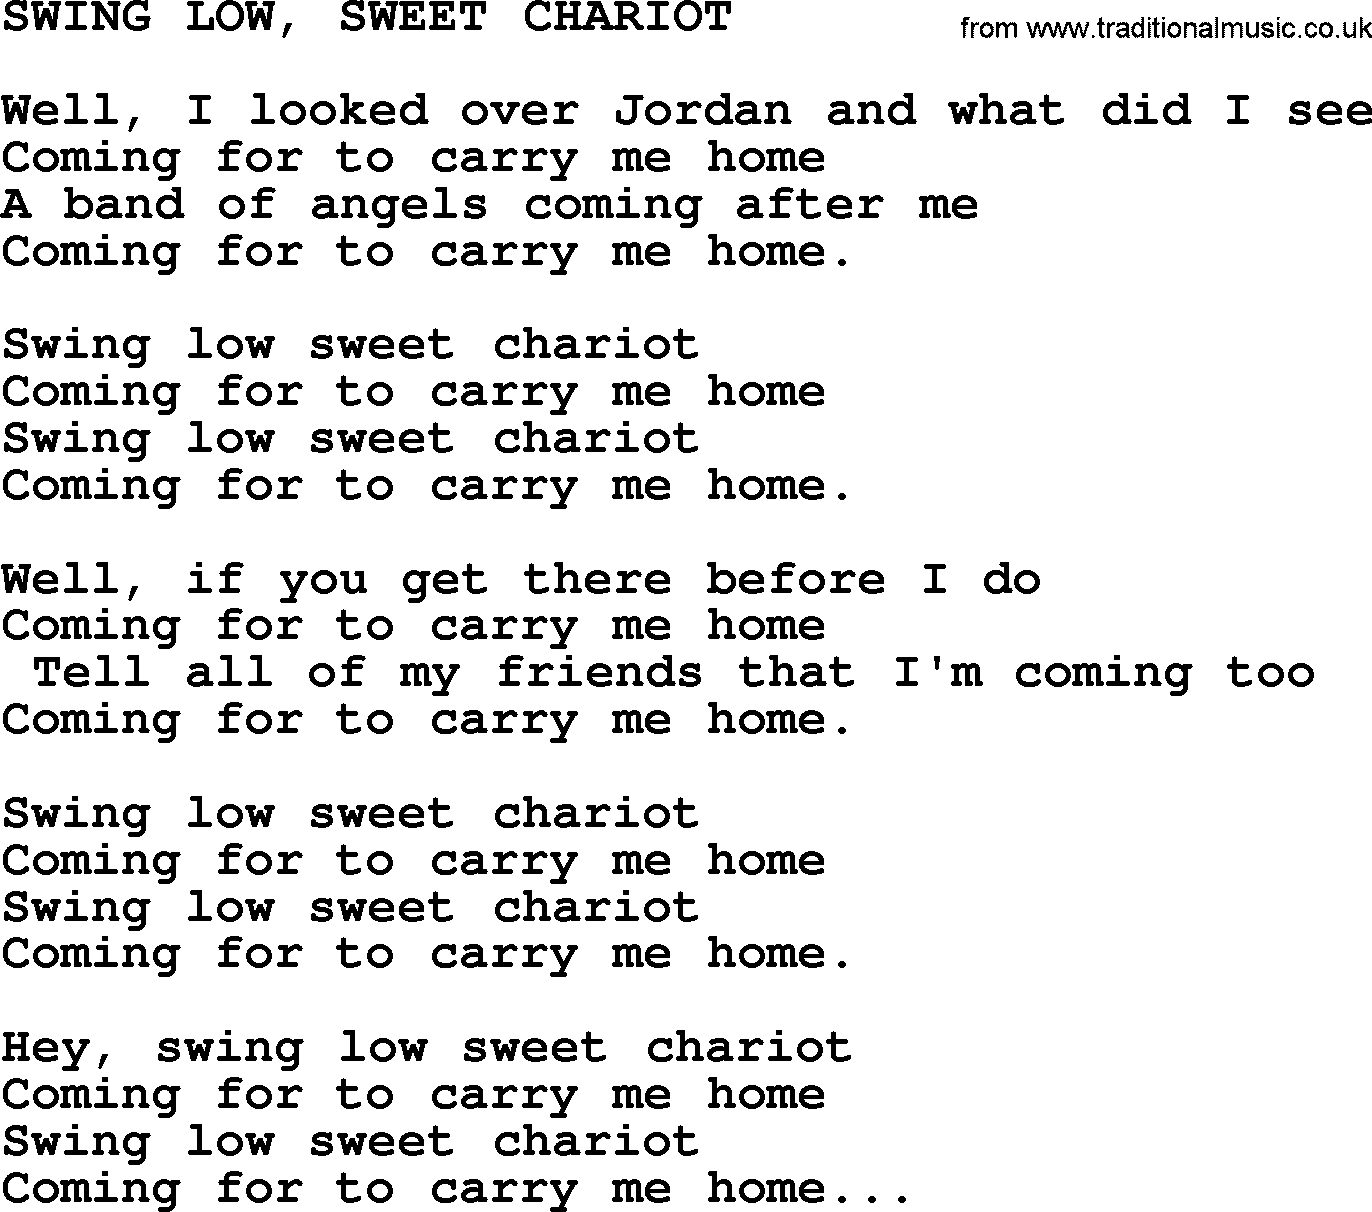 Merle Haggard song: Swing Low, Sweet Chariot, lyrics.